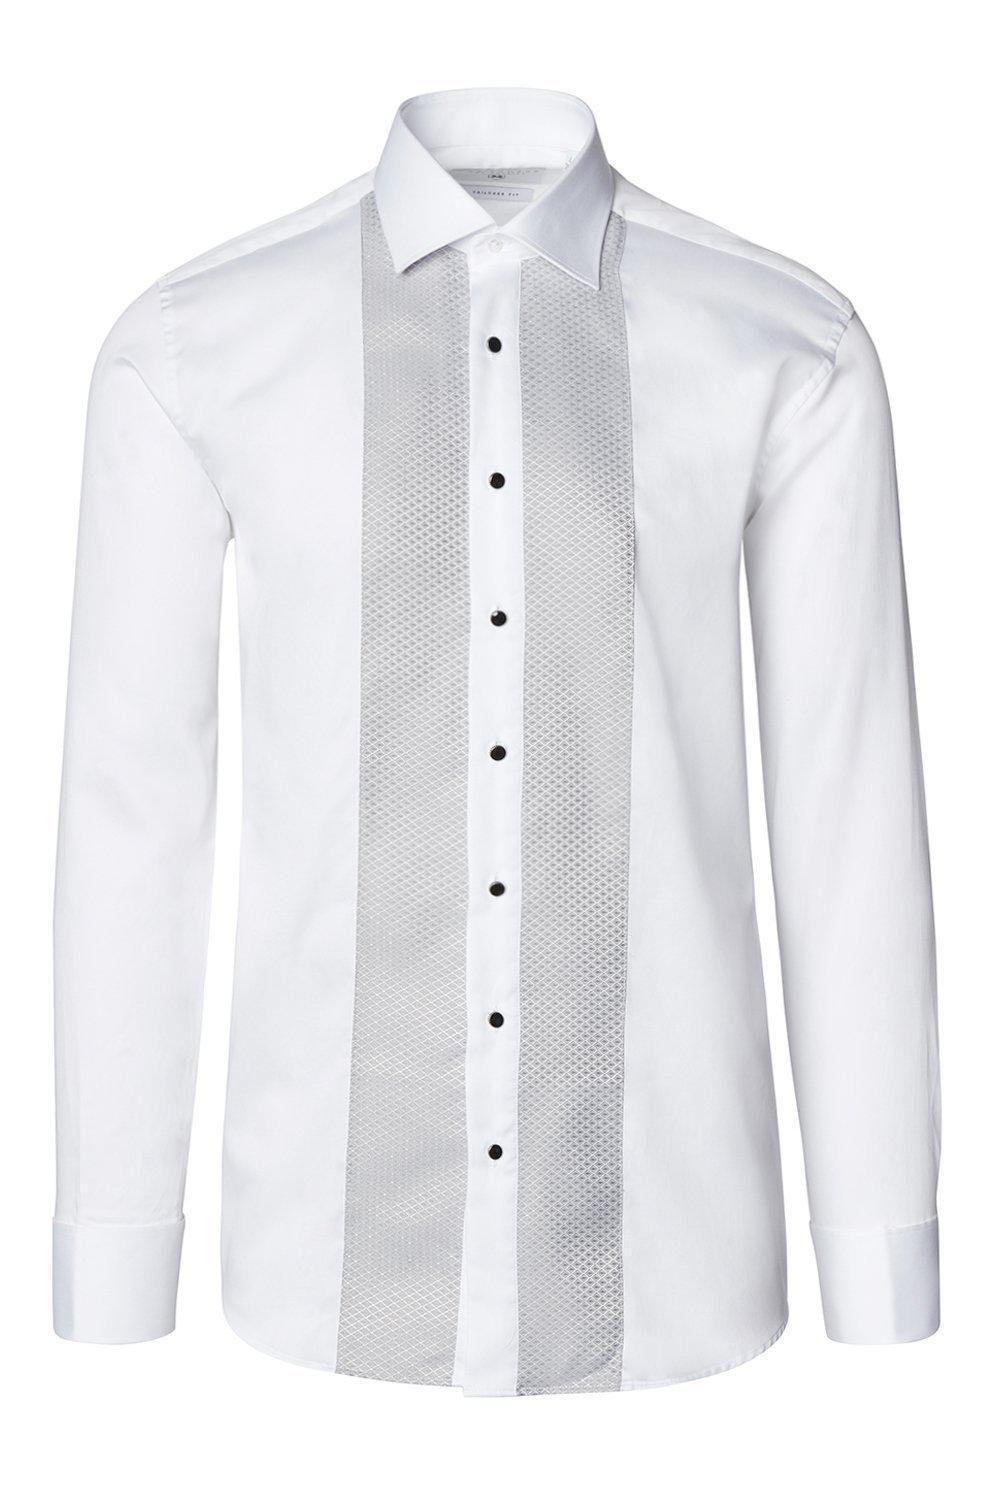 Lurex Paneled Spread Collar Shirt - WHITE GREY - Ron Tomson